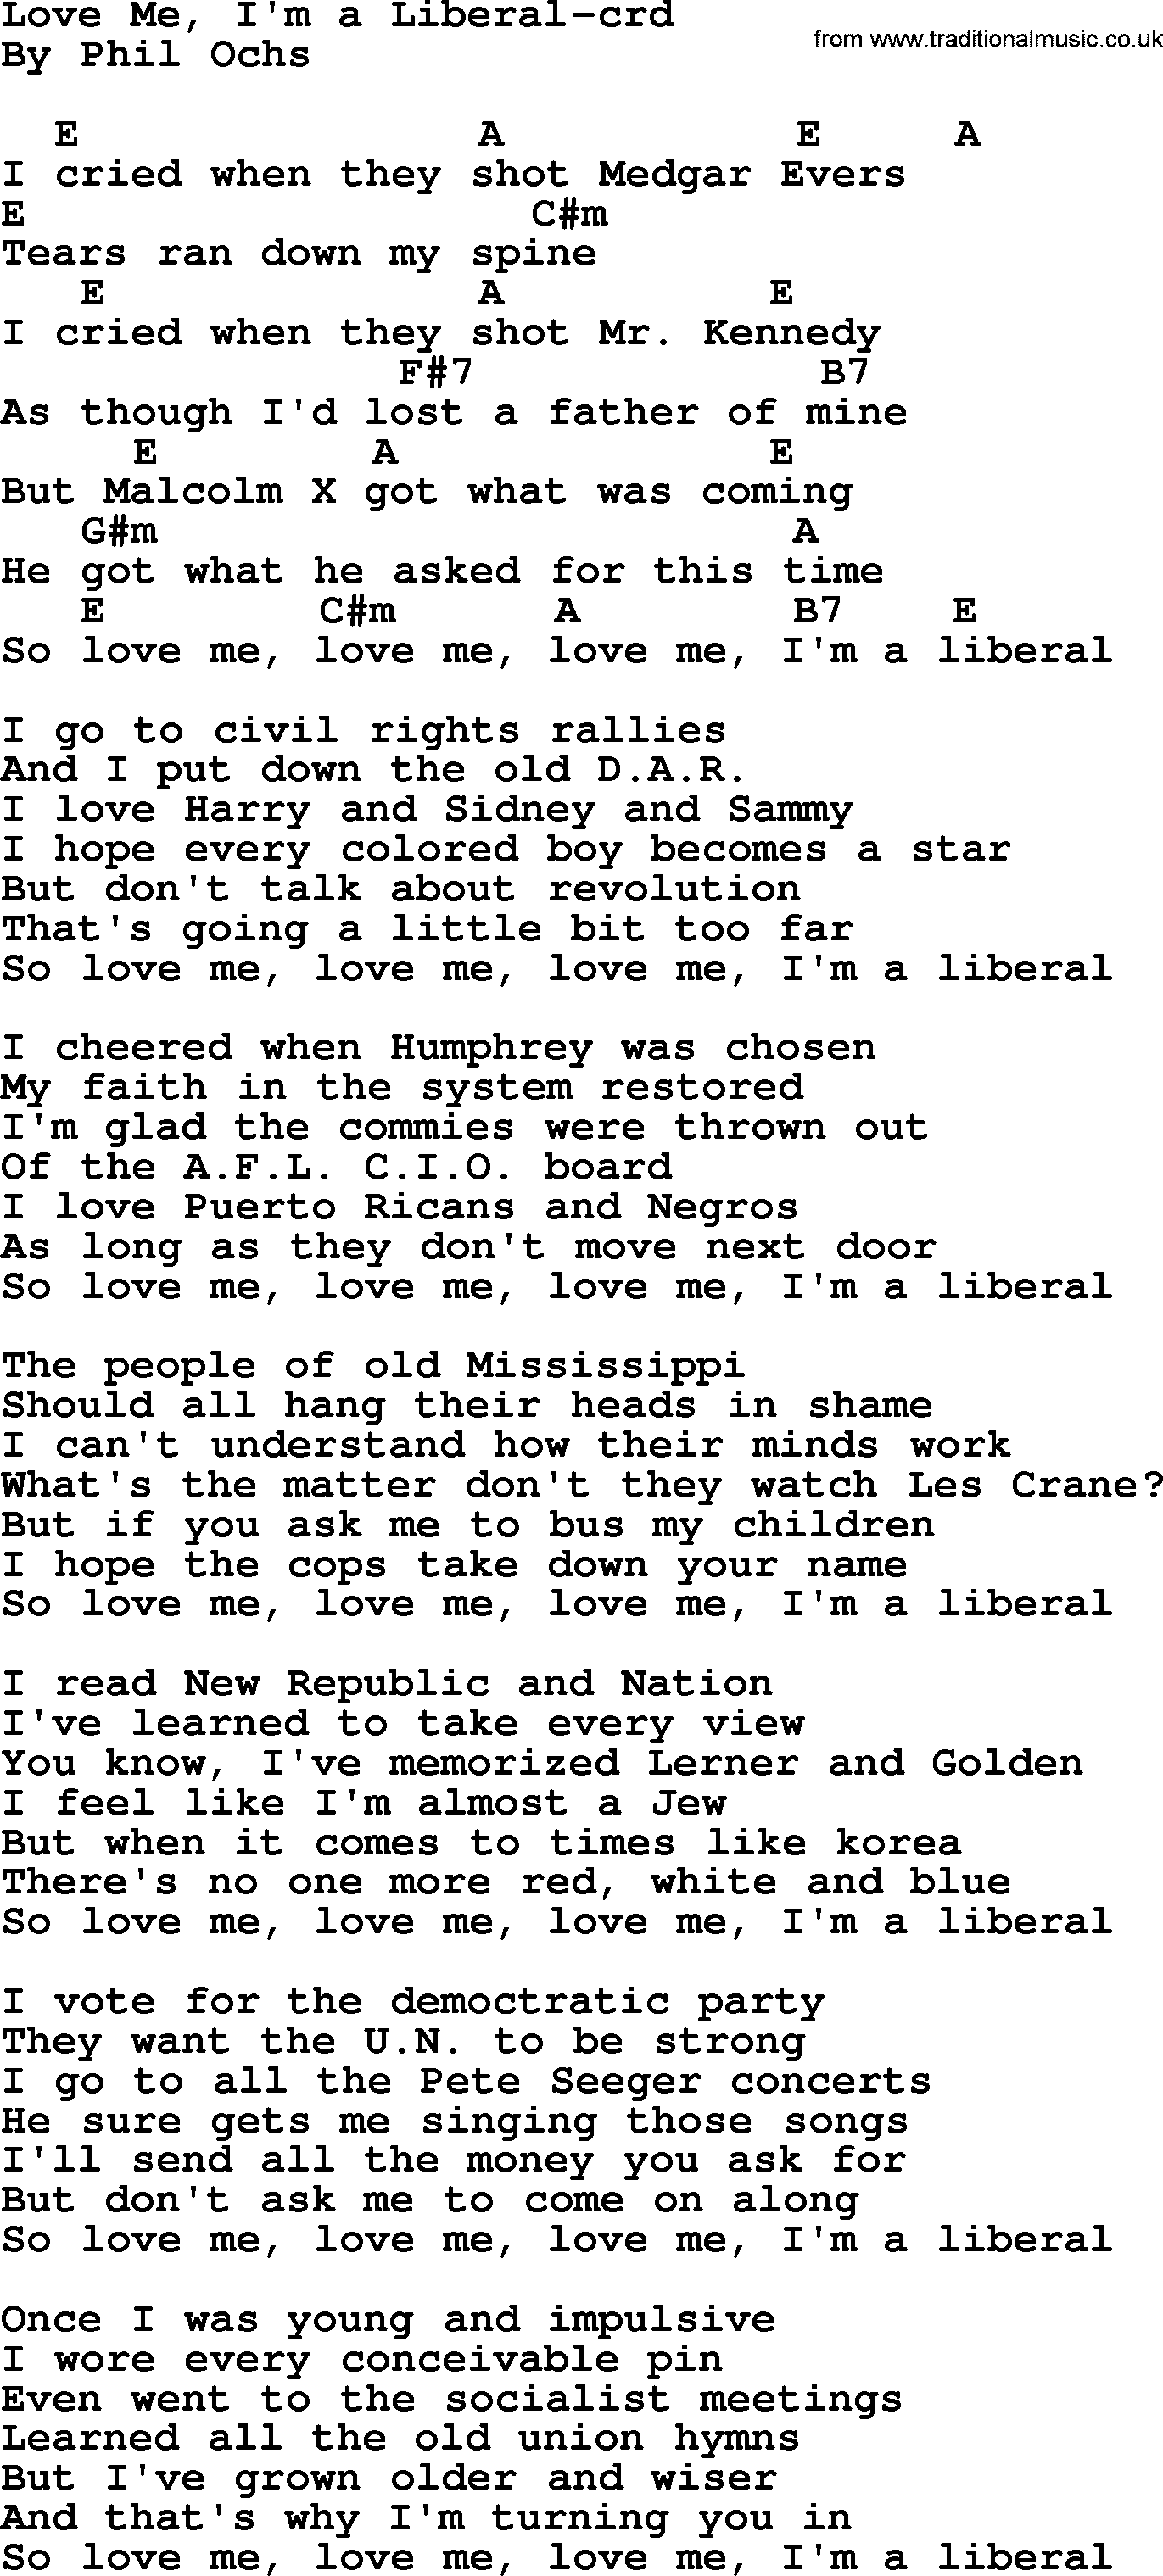 Phil Ochs song Love Me, I'm A Liberal- by Phil Ochs, lyrics and chords